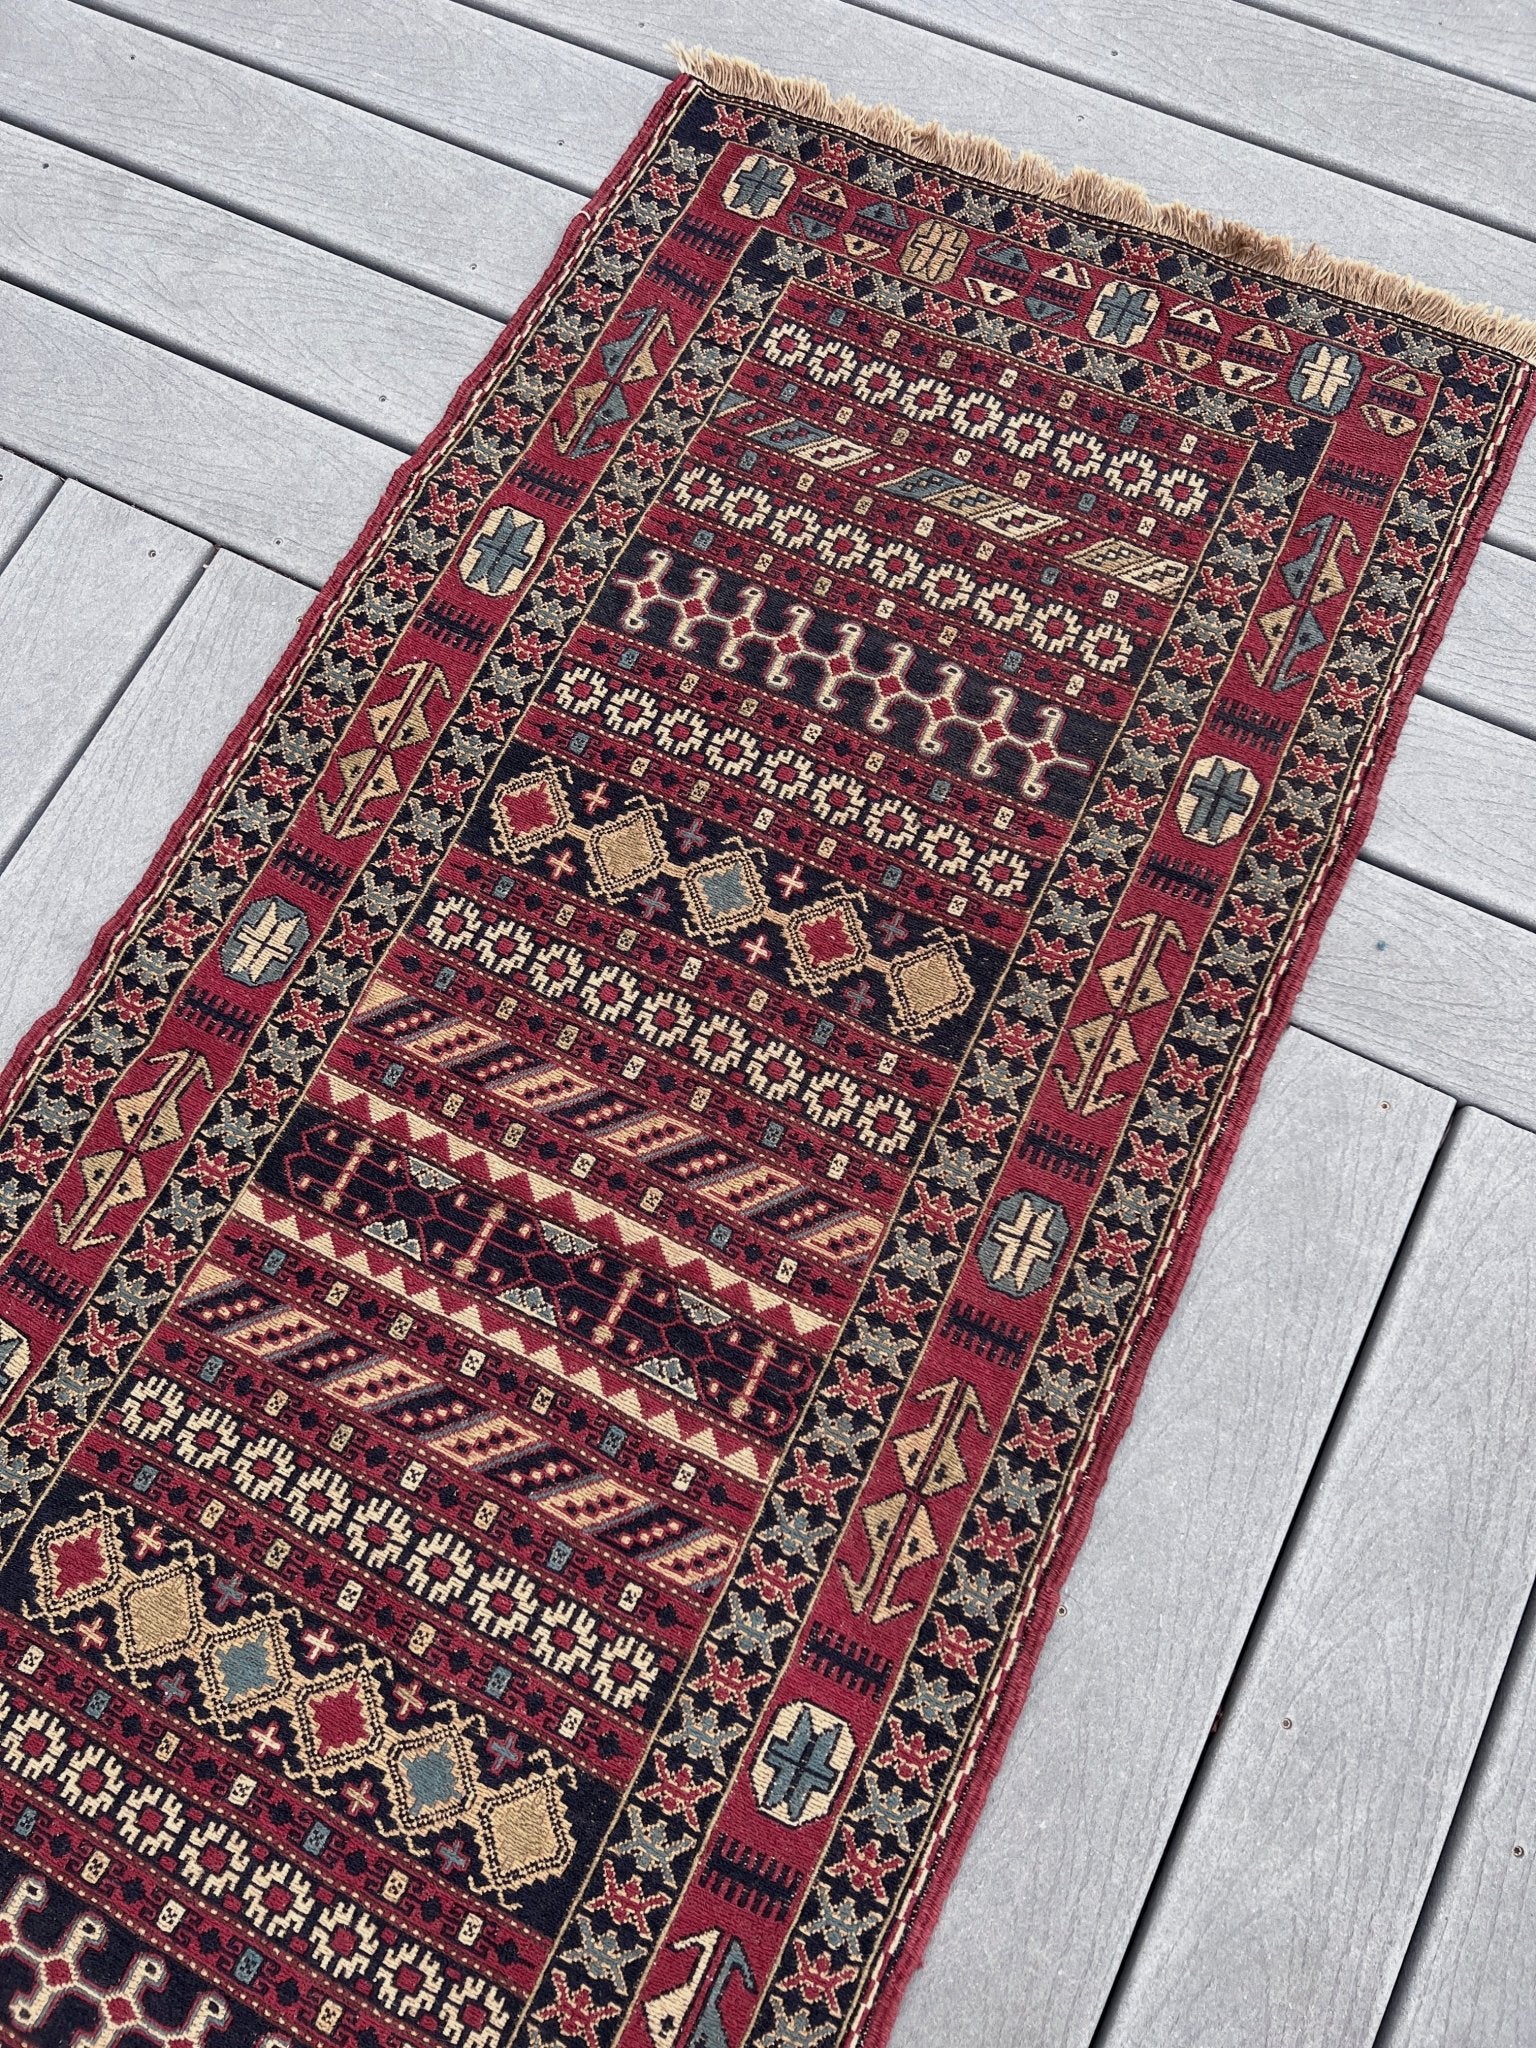 Rahrah persian soumak kilim rug. Oriental rug shop san francisco bay area.